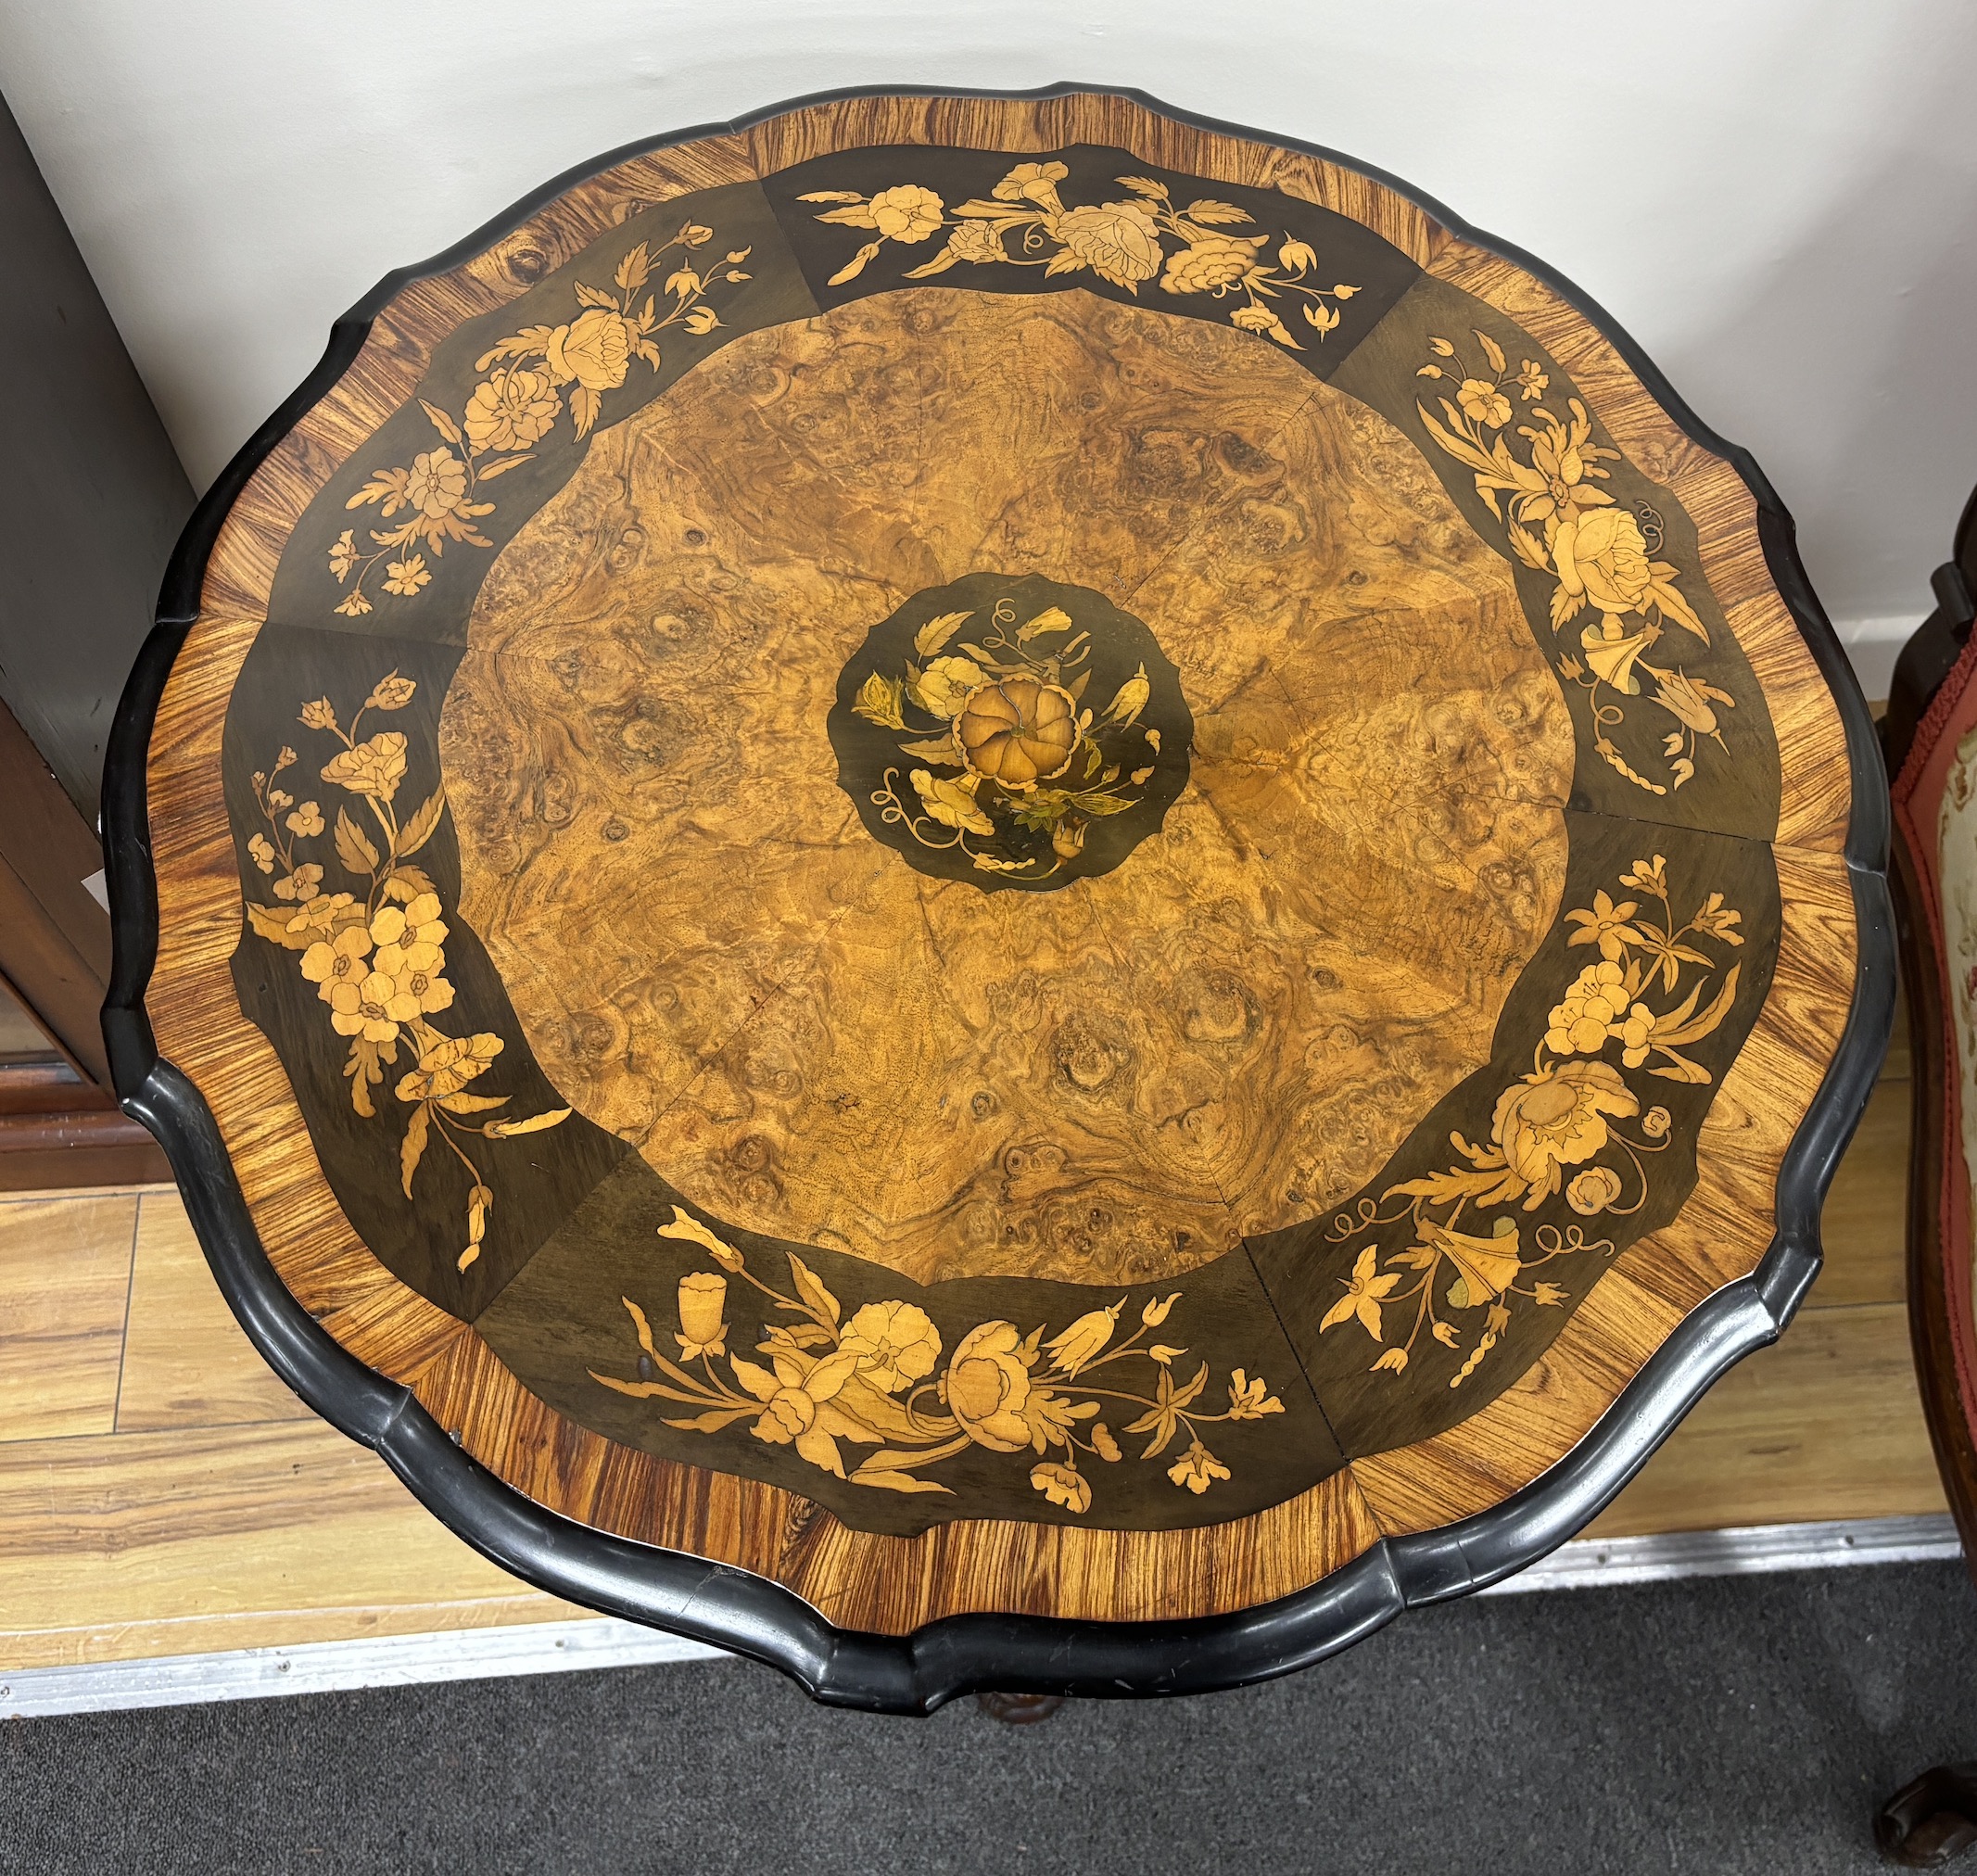 A 19th century Italian floral marquetry burr walnut circular tripod table, diameter 70cm, height 75cm